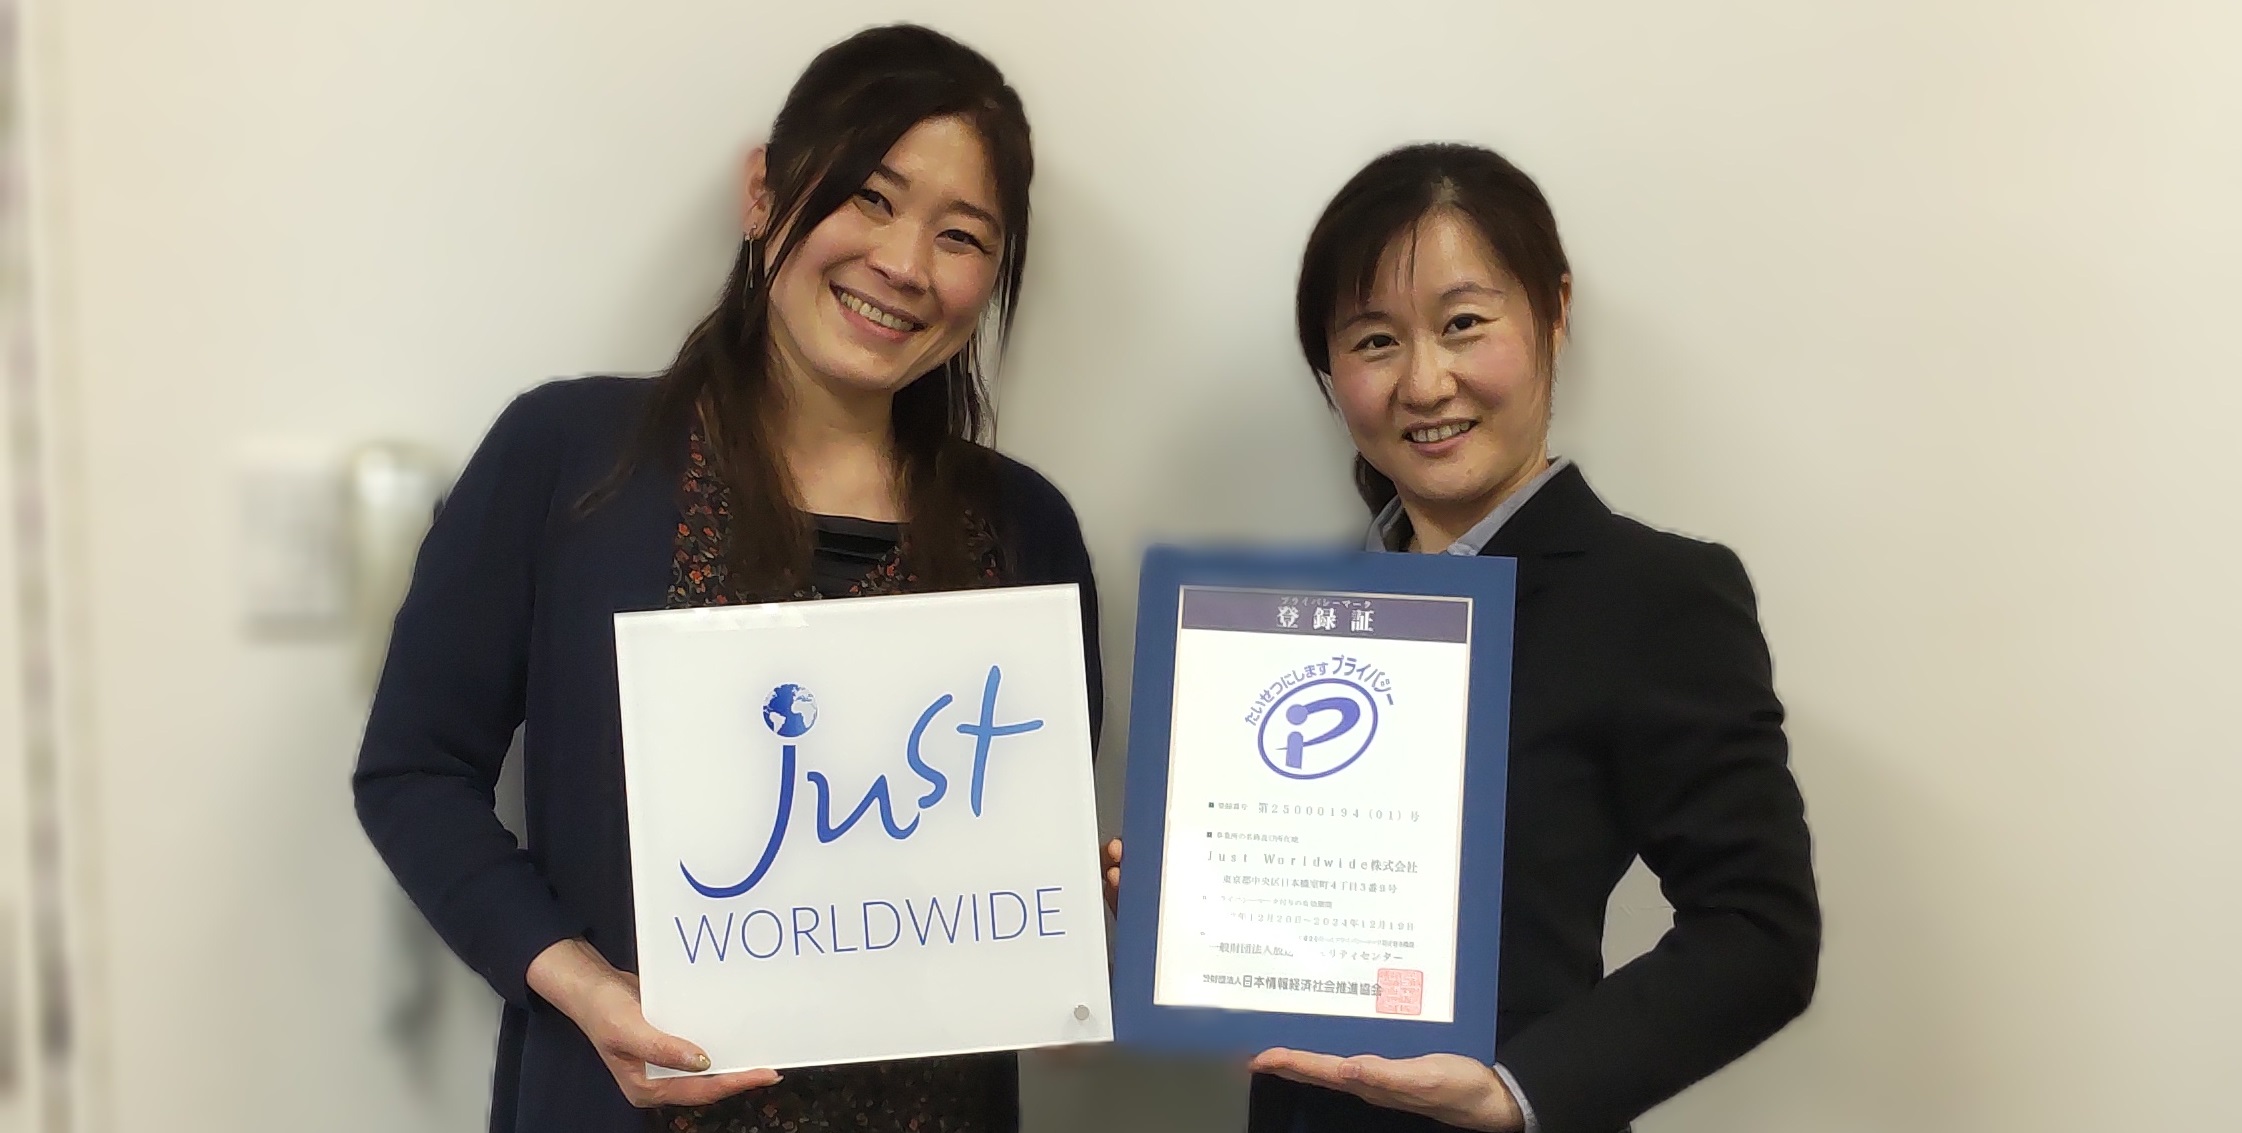 Just Worldwide achieves P Mark certification in Japan